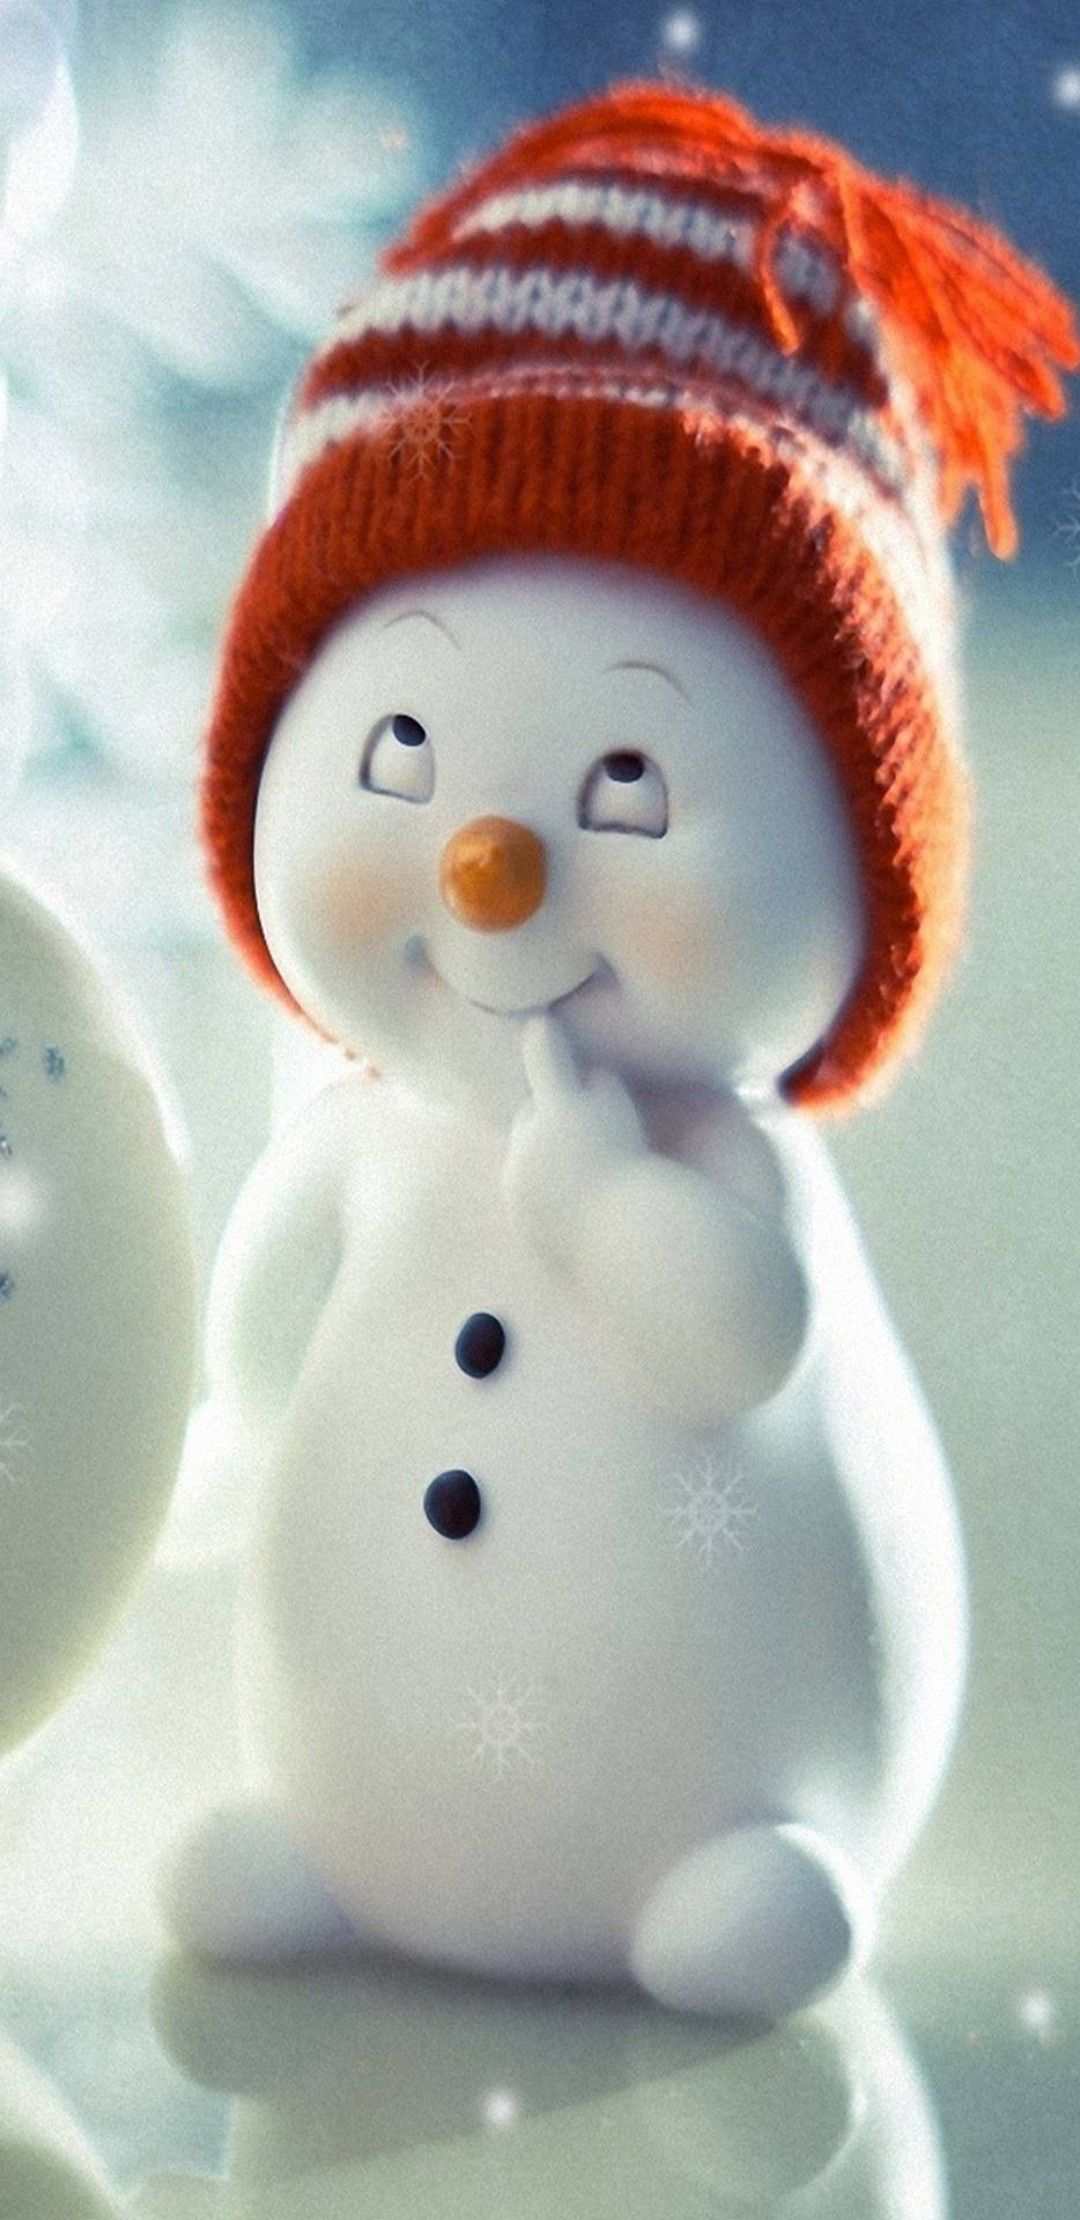 1080x2220 Pin by Gladys Alvear de Ortega on NAVIDAD | Snowman wallpaper, Cute snowman, Christmas phone wallpaper